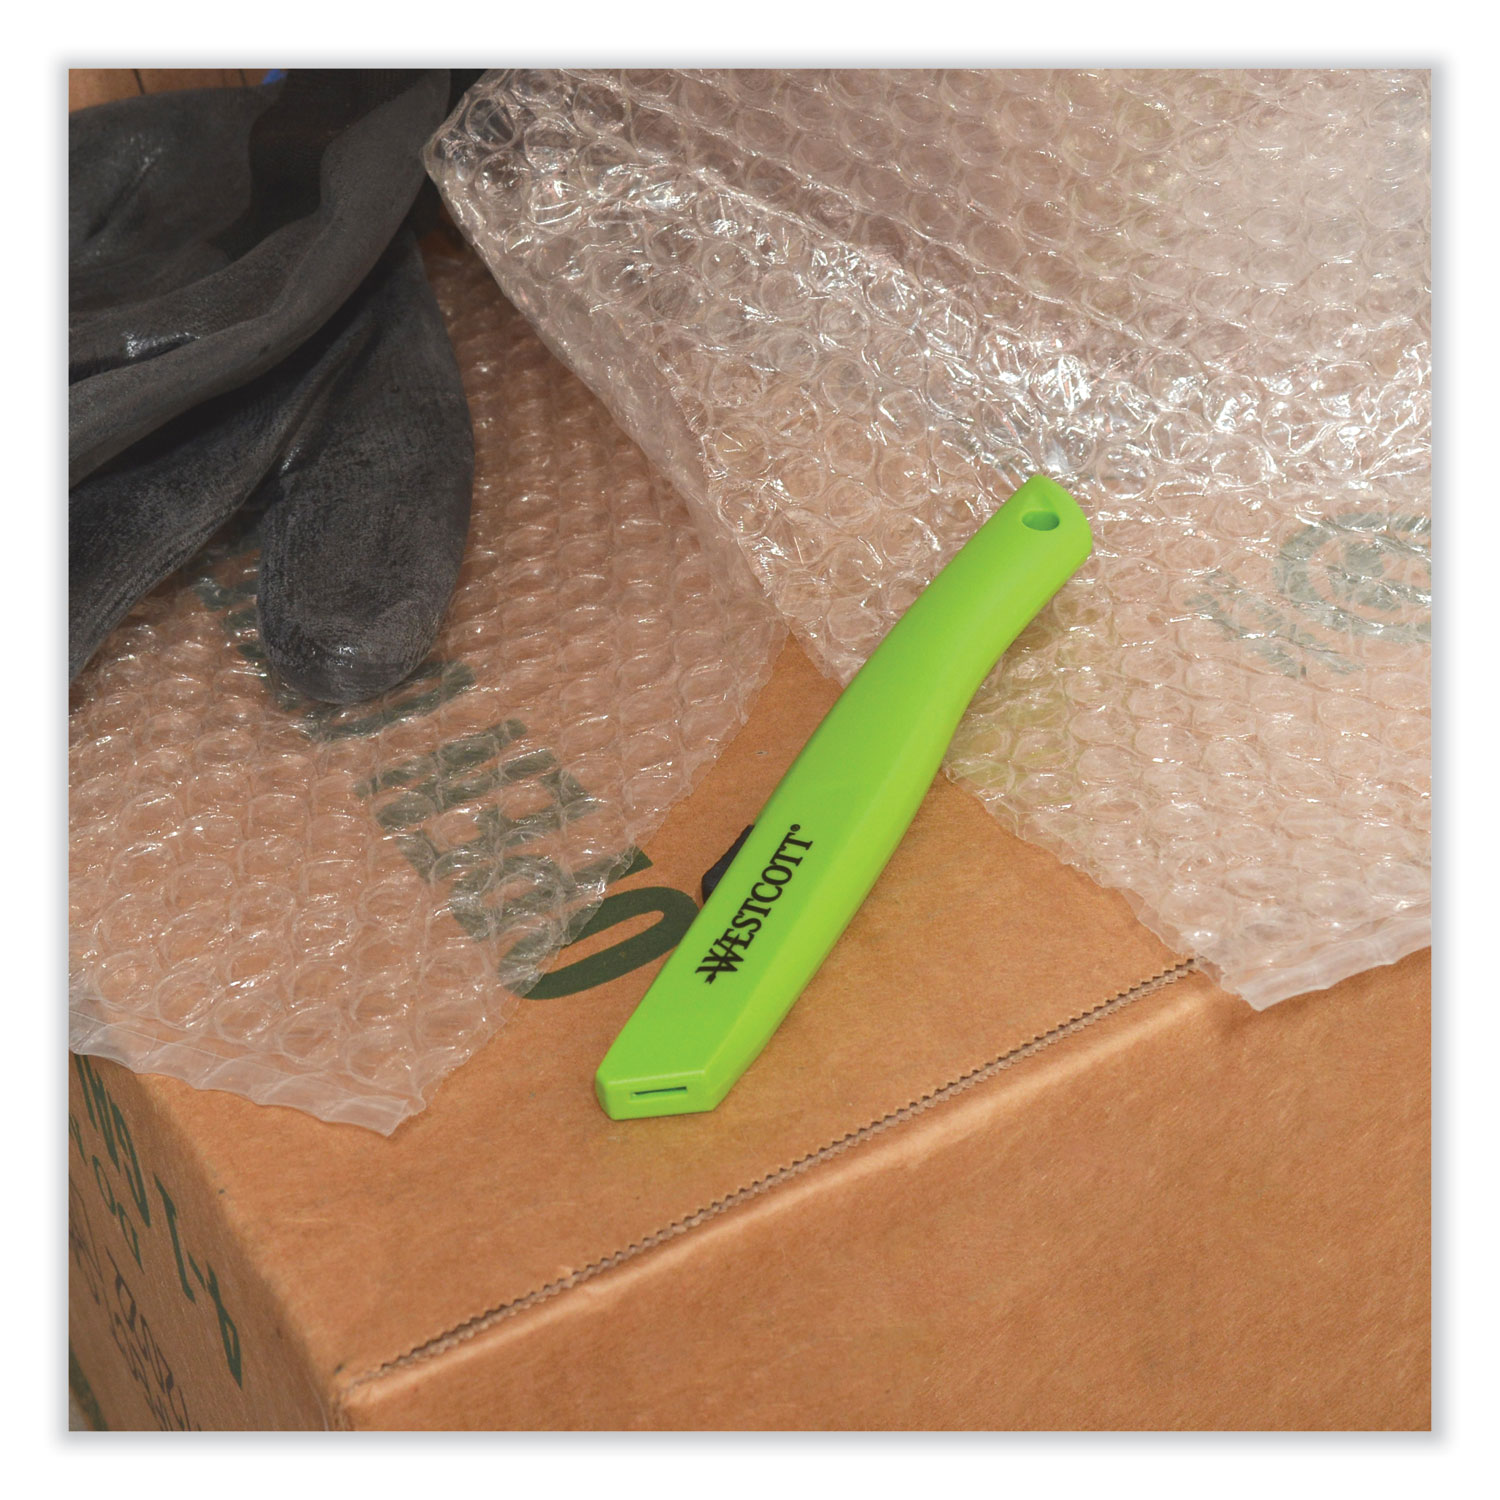 Safety Ceramic Blade Box Cutter, 0.5 Blade, 6.15 Plastic Handle, Green -  Zerbee